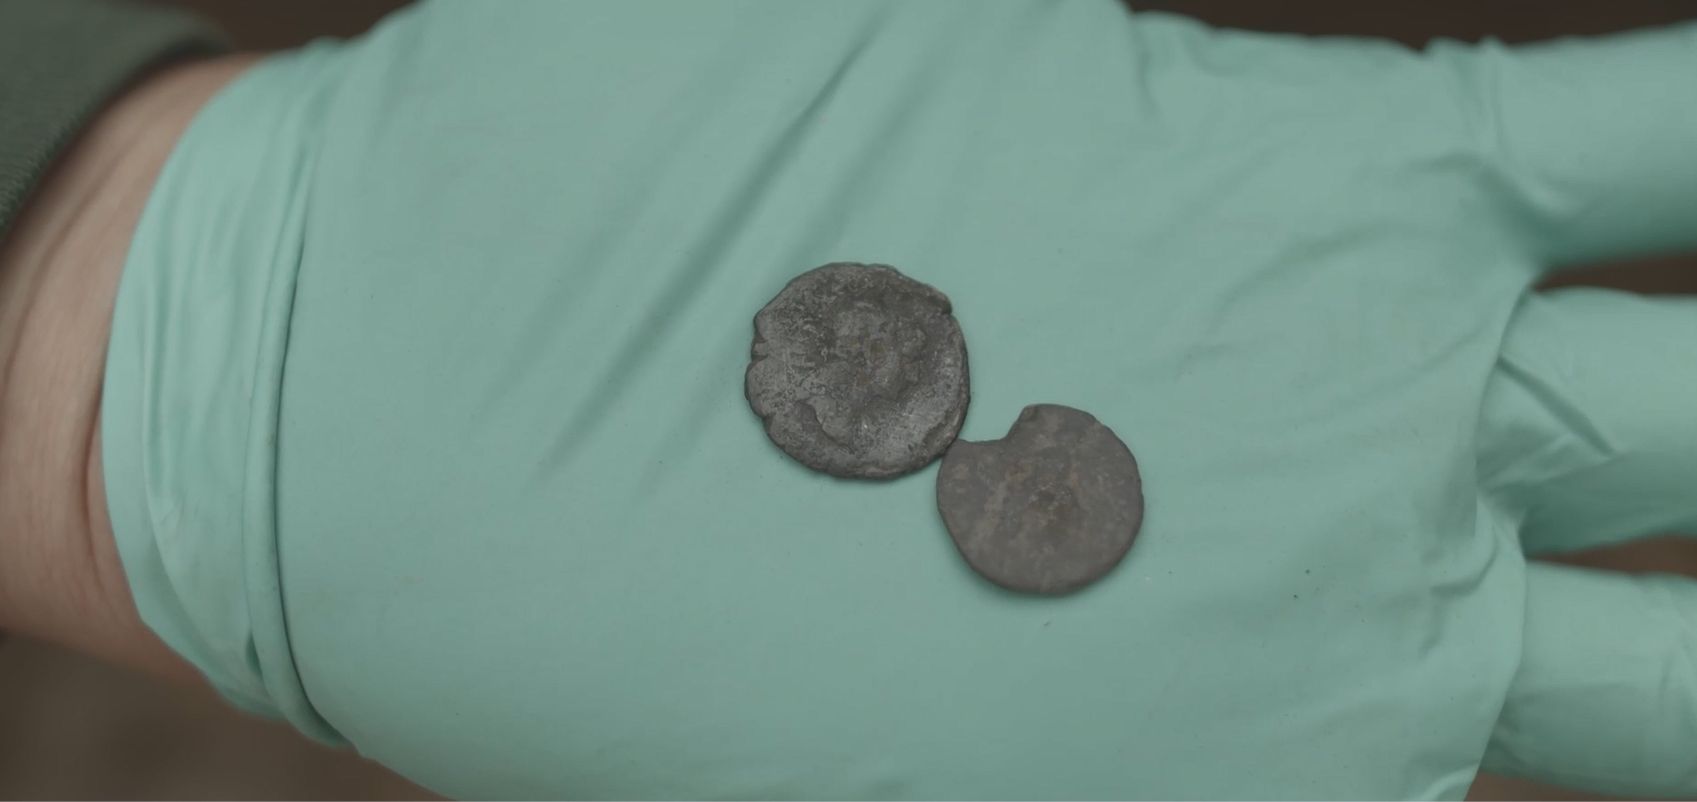 Enkele gevonden munten